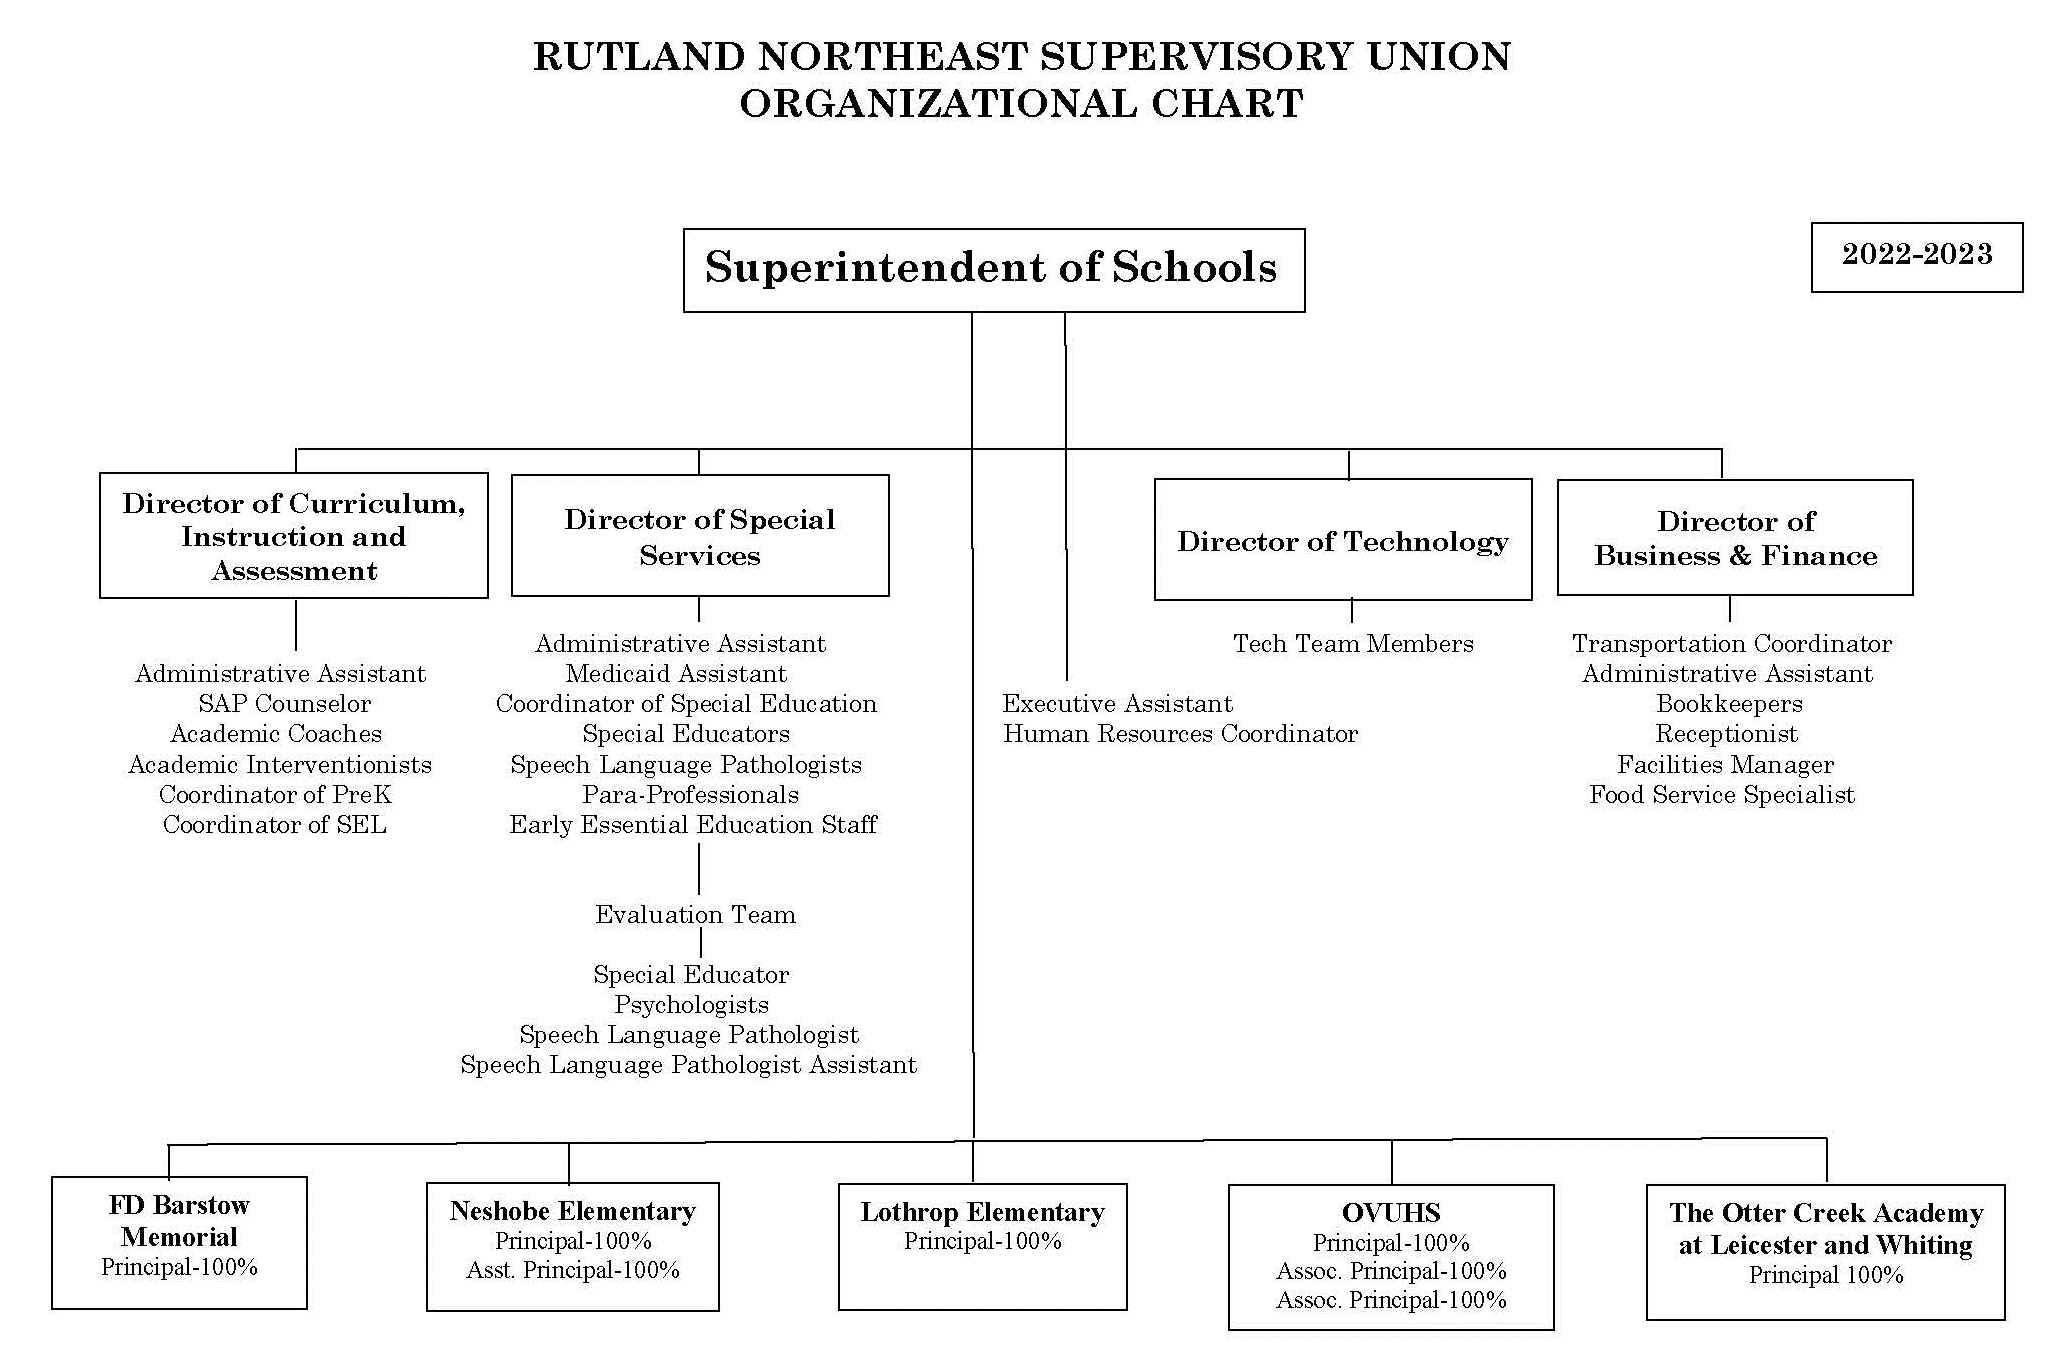 RNESU Organizational Chart